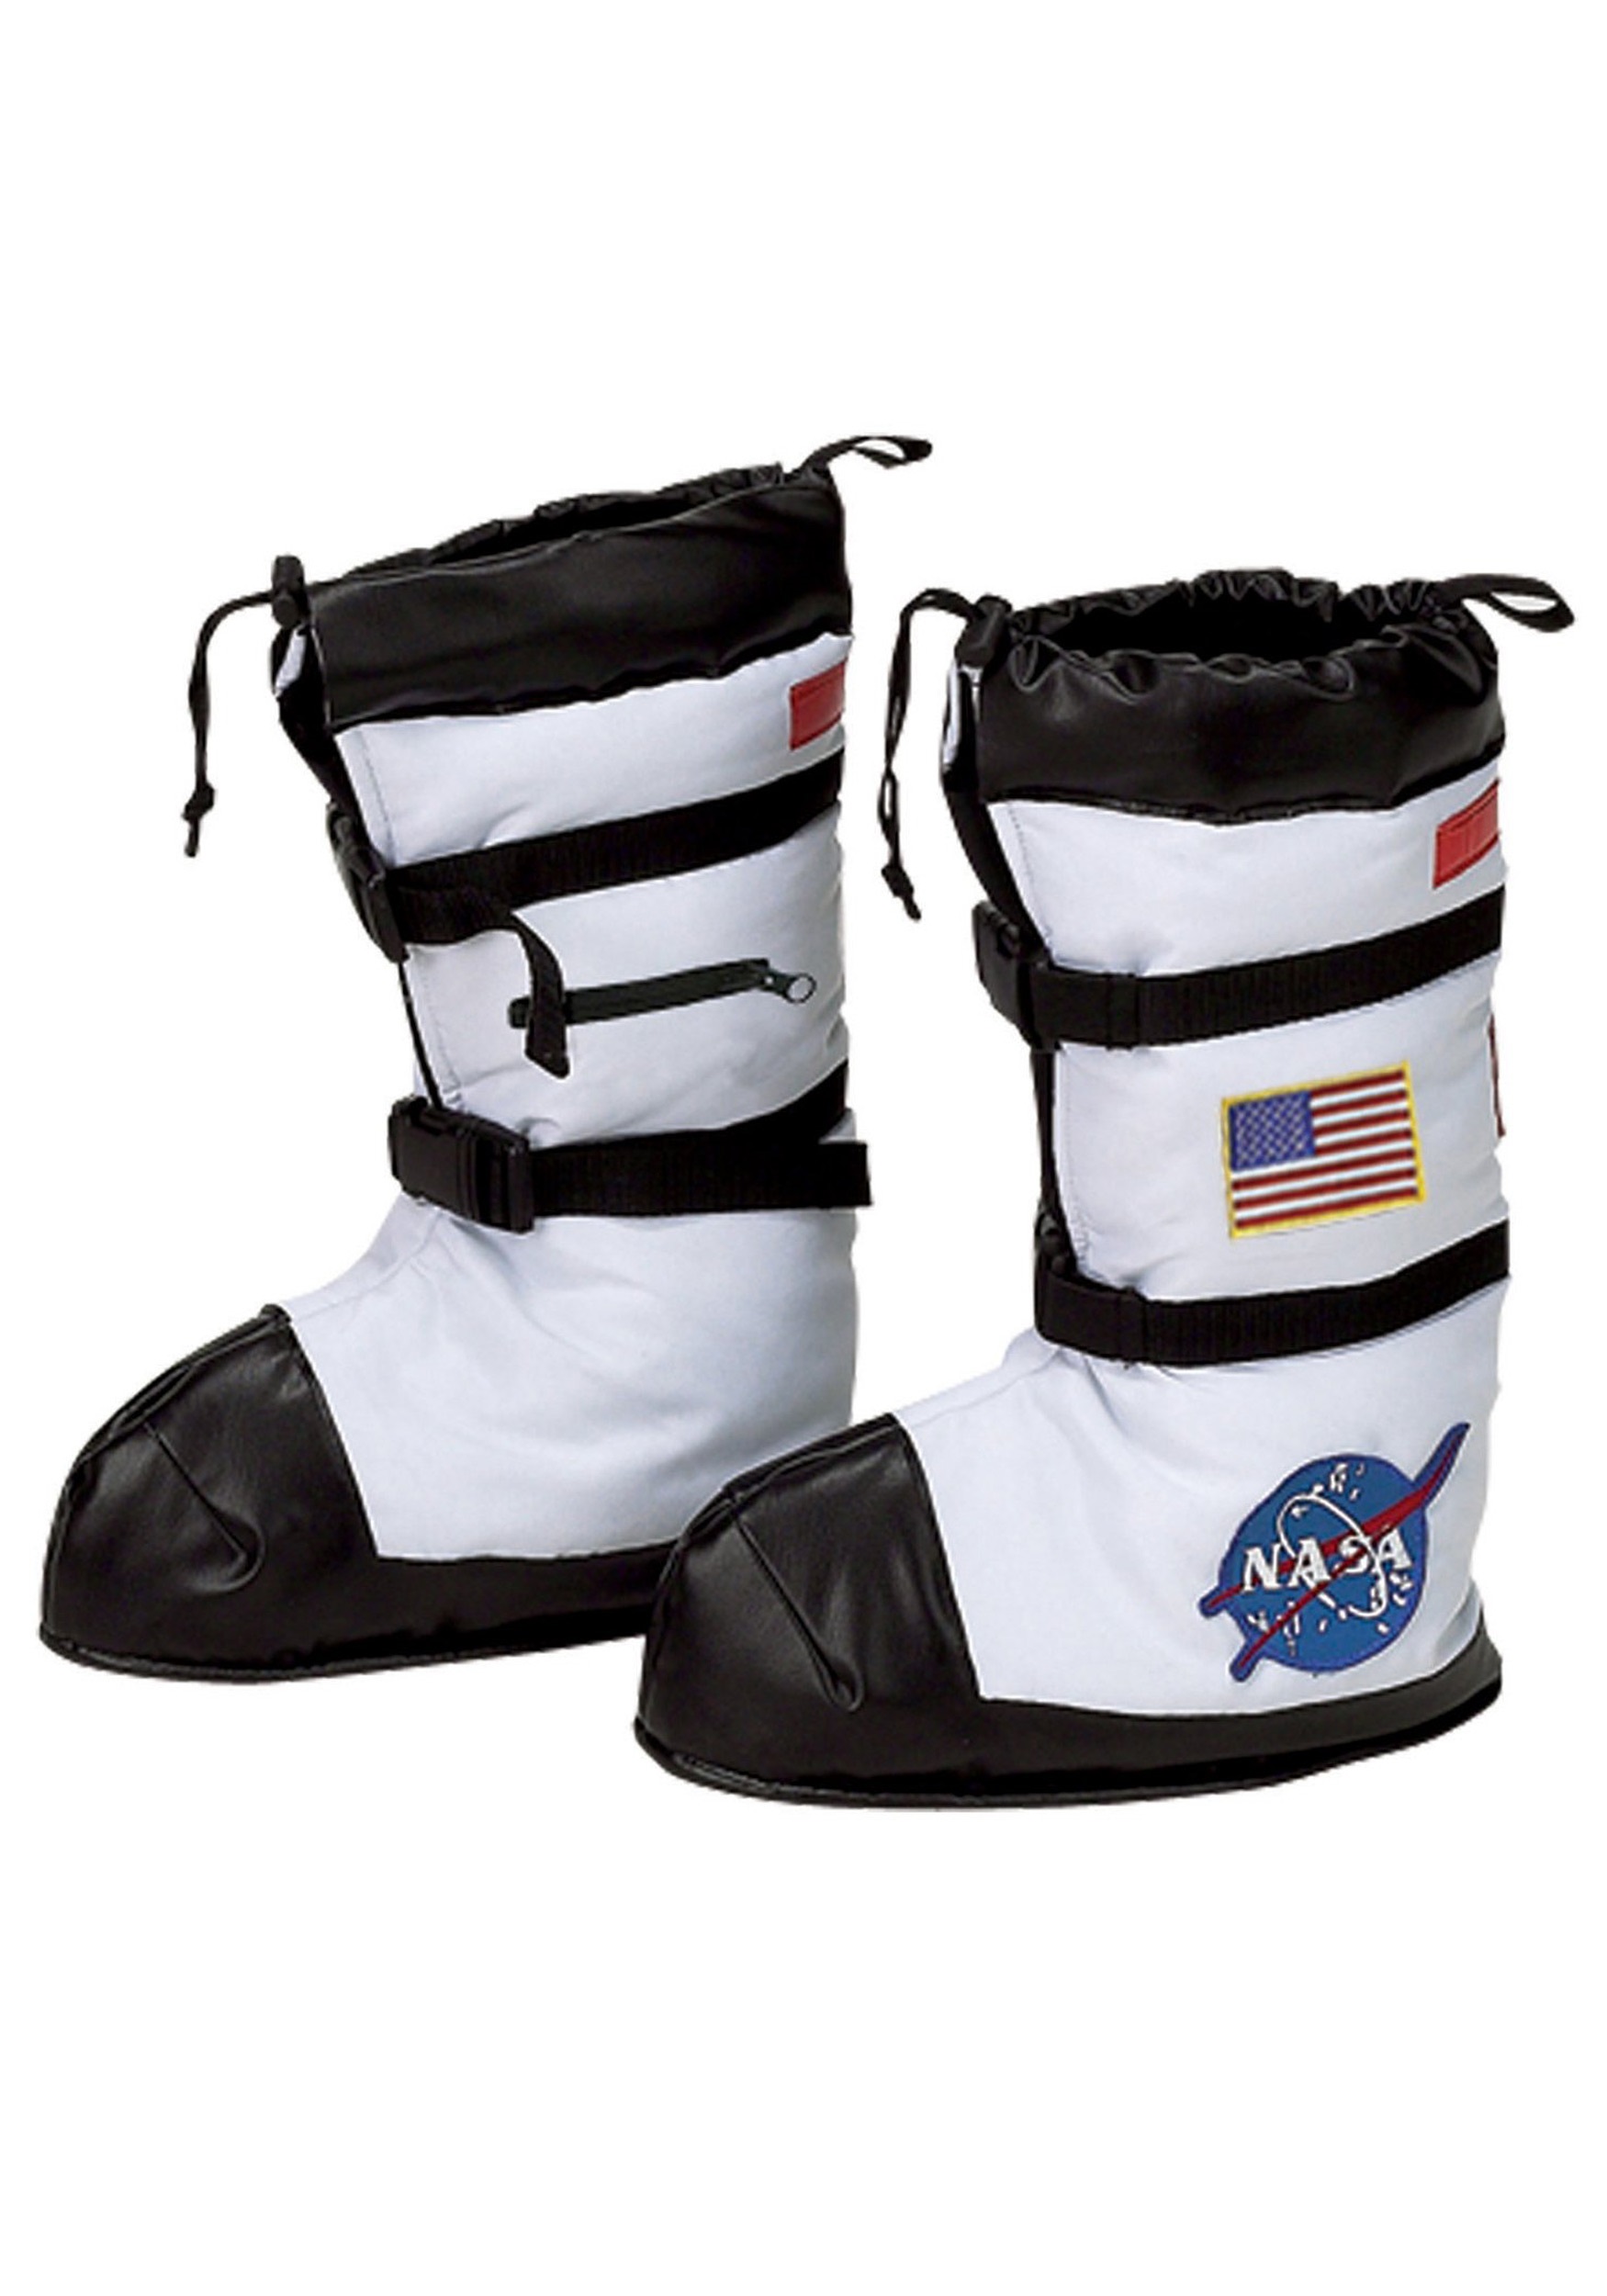 boots clipart astronaut